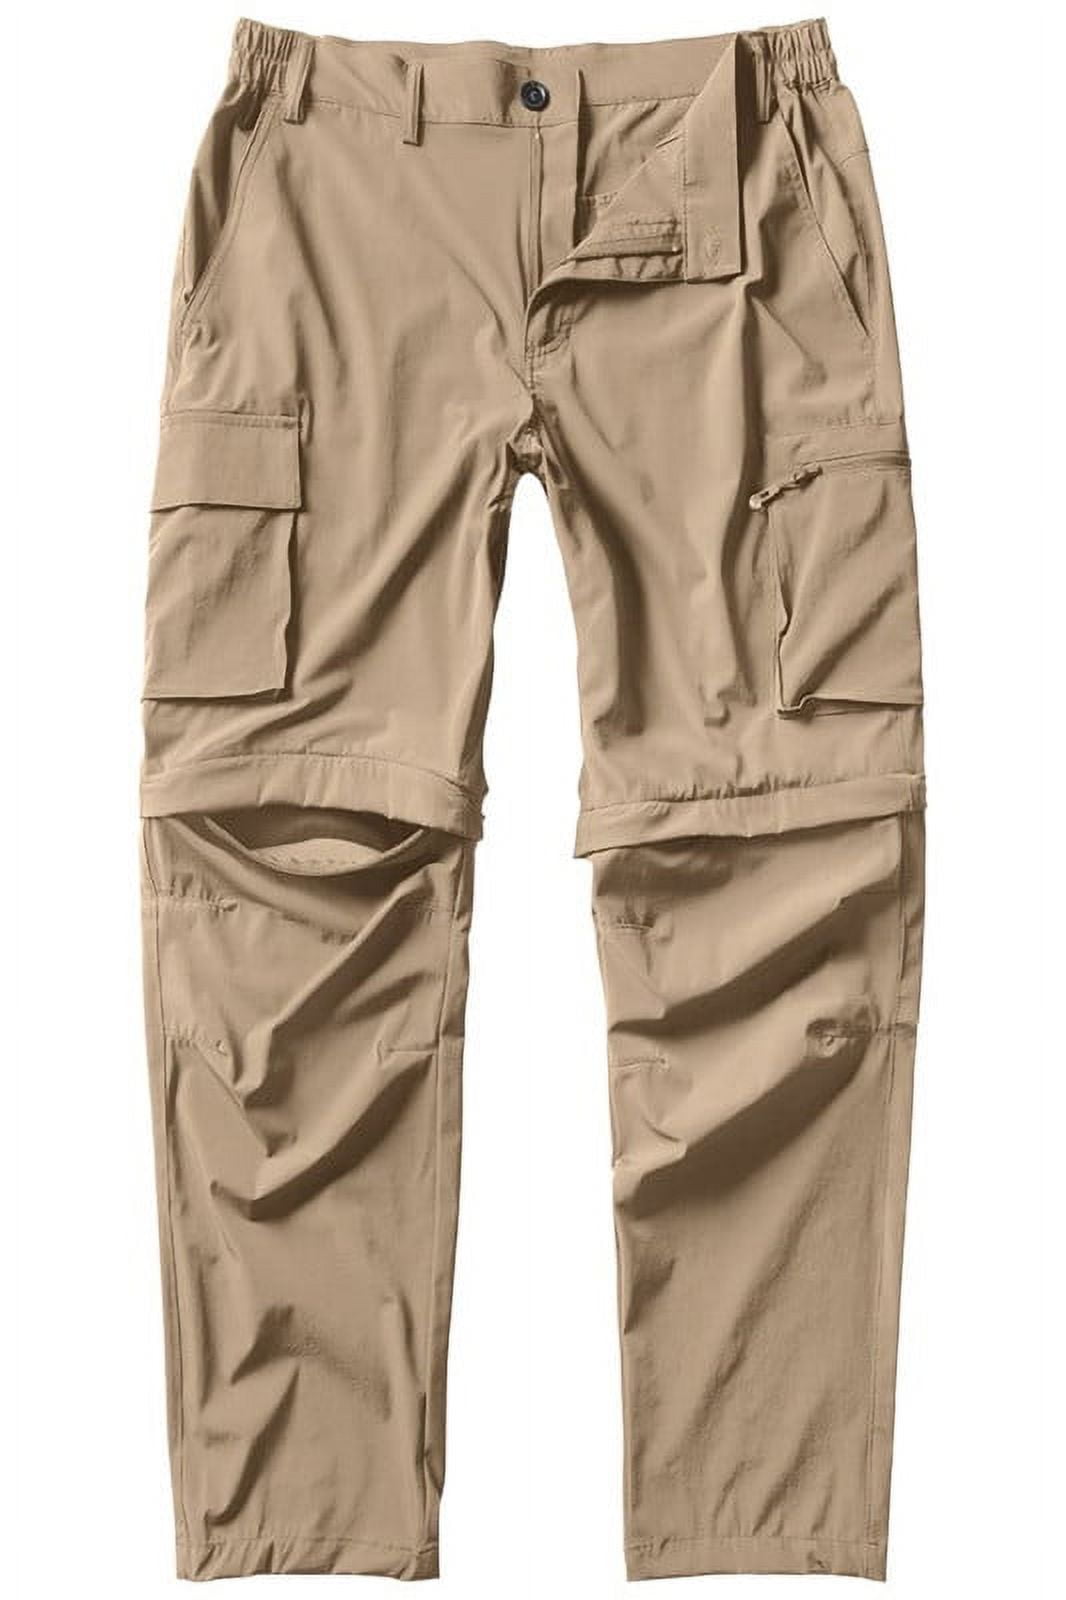 Gash Hao Mens Hiking Convertible Pants Outdoor Waterproof Quick Dry Pants 